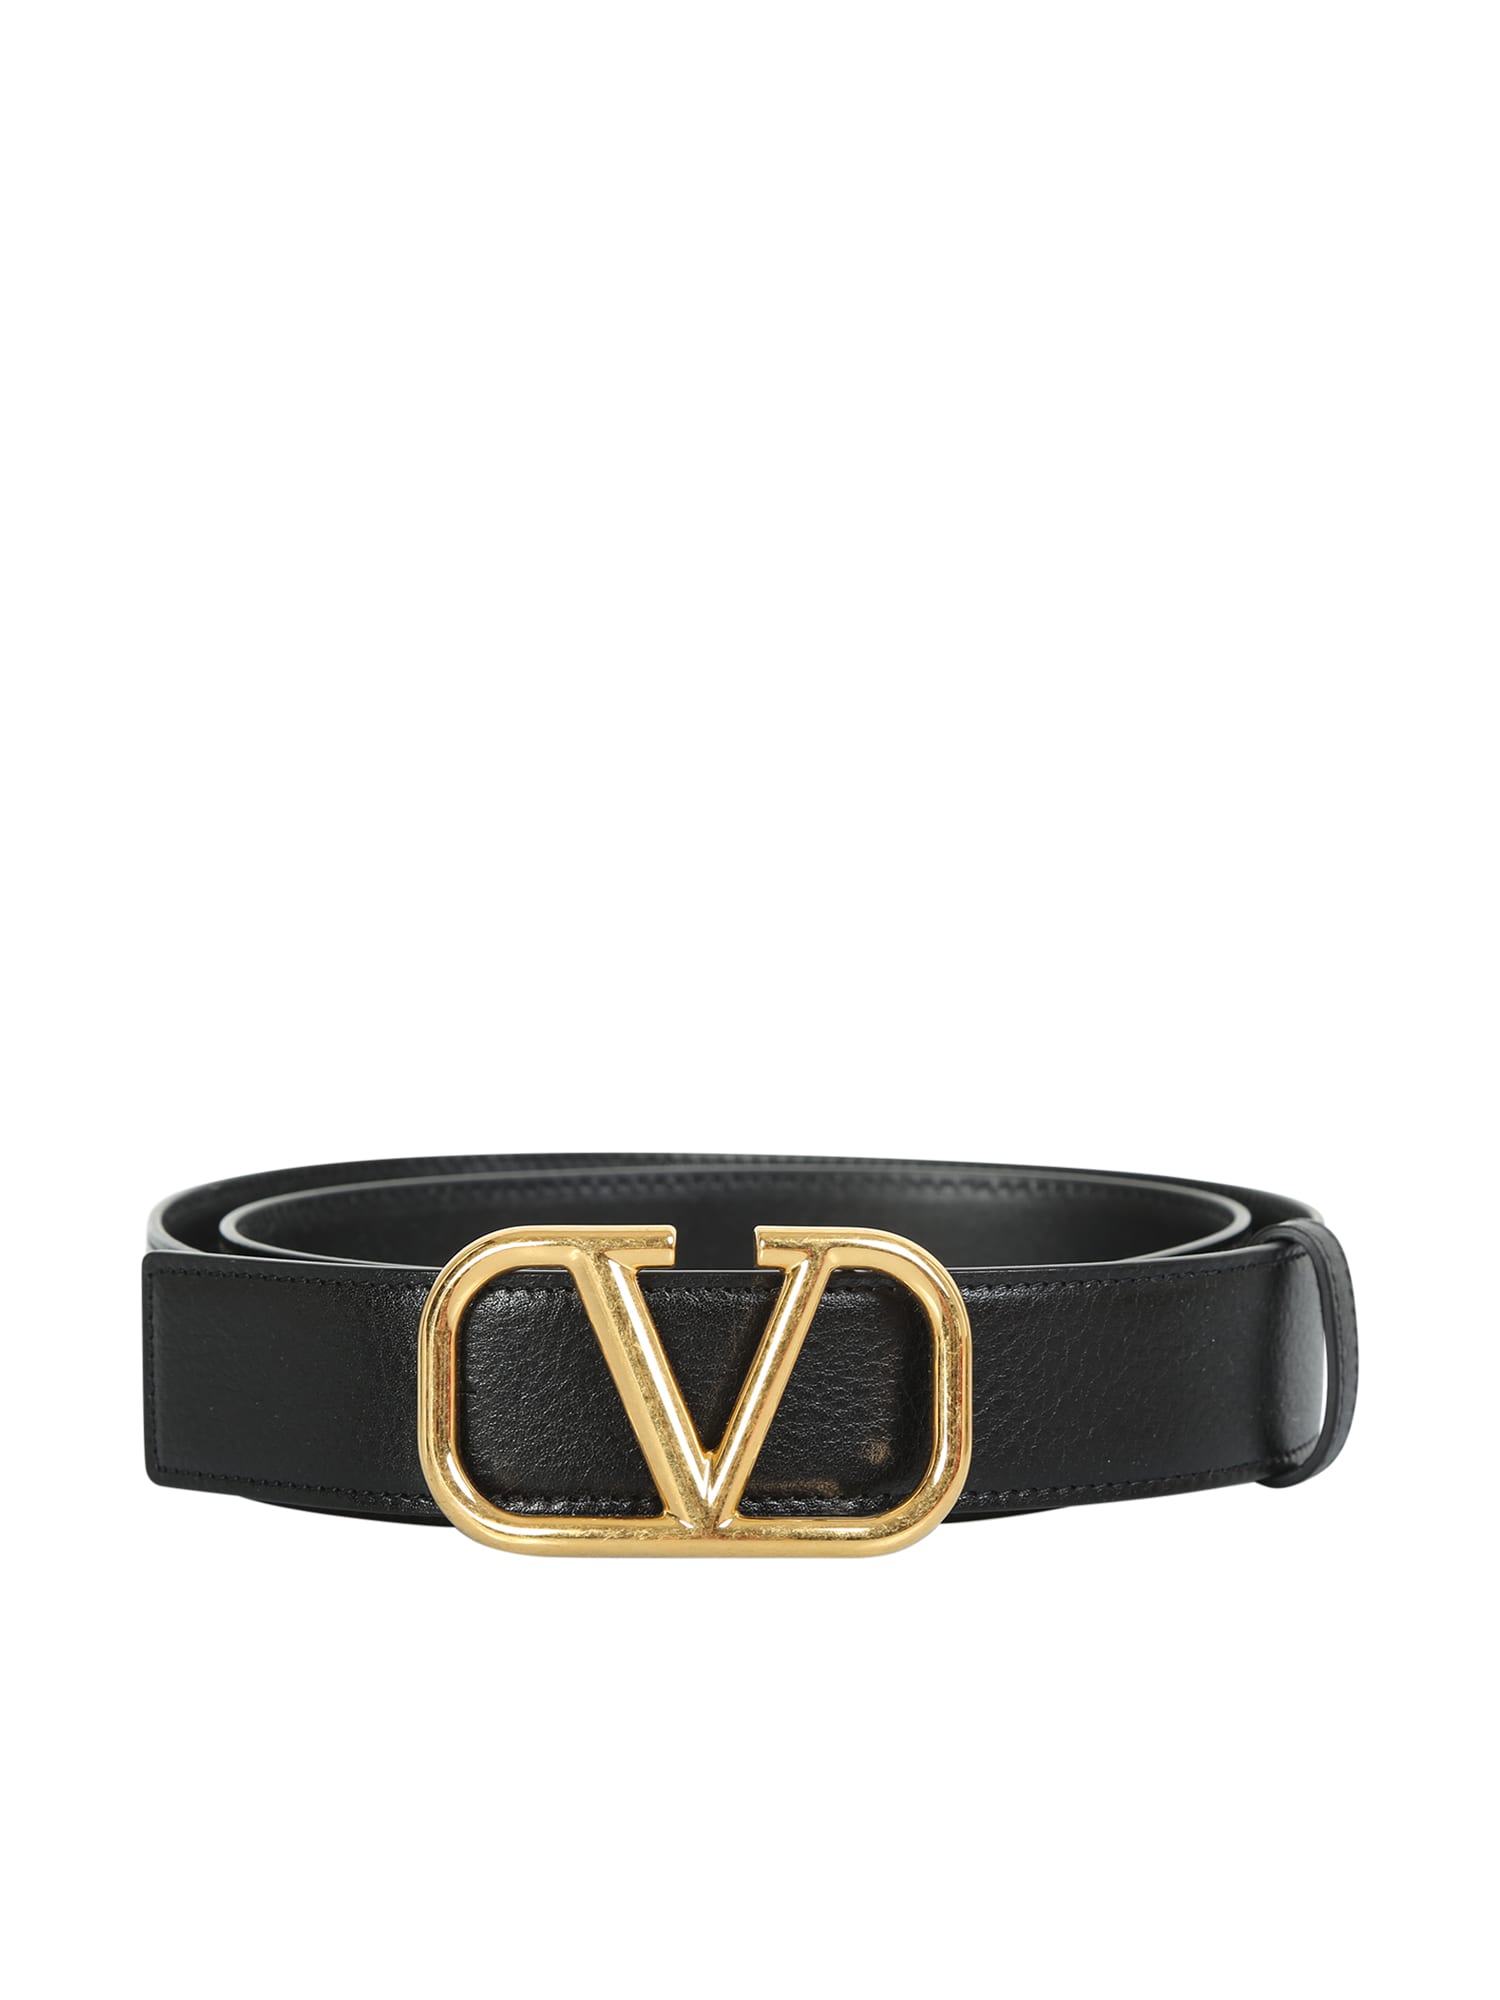 Valentino Garavani Calfskin Belt With Characteristic Vlogo Buckle In Bright Gold